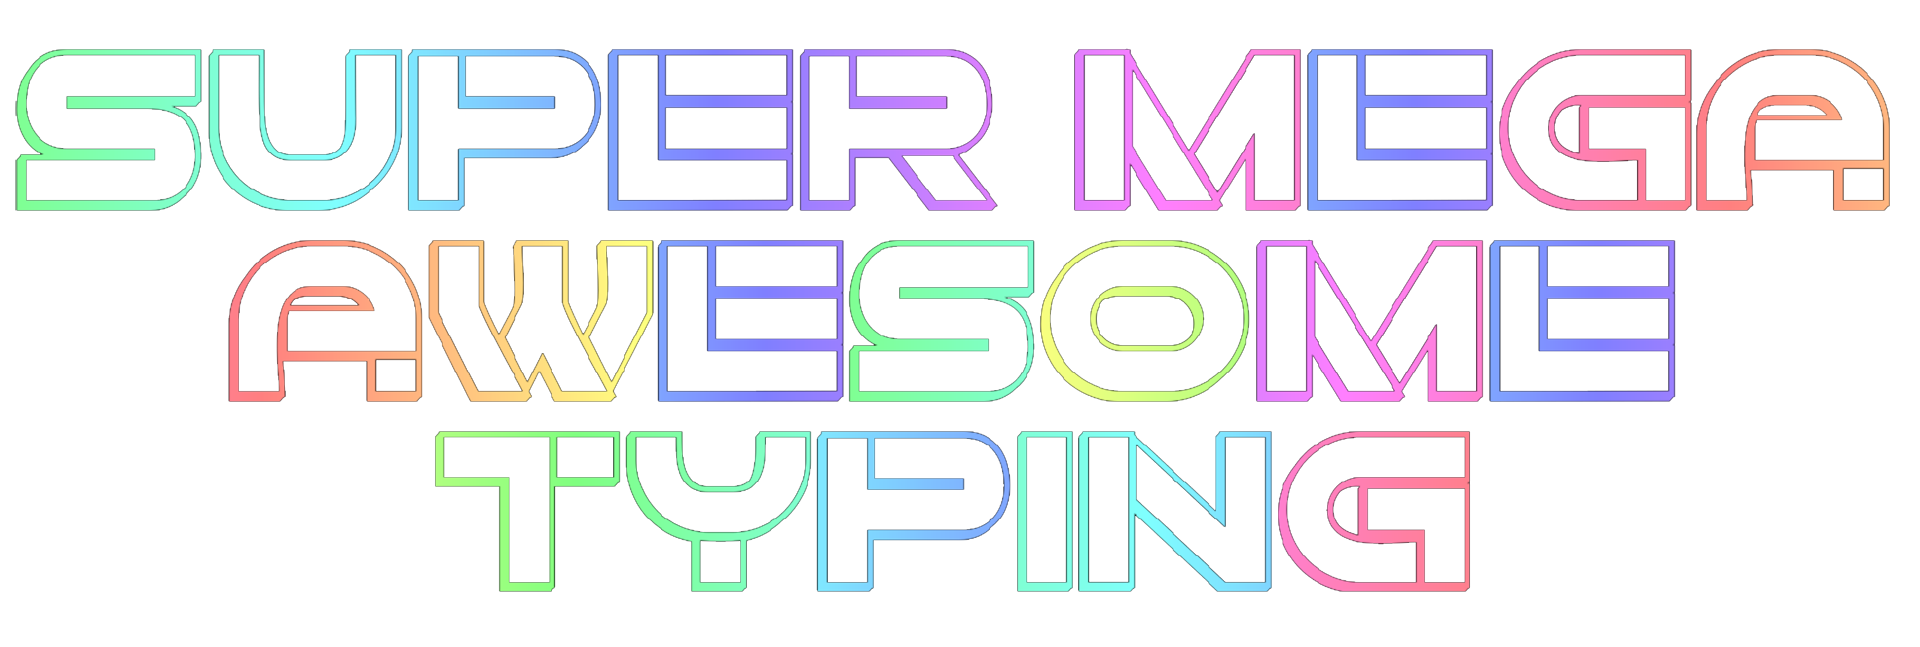 Super Mega Awesome Typing